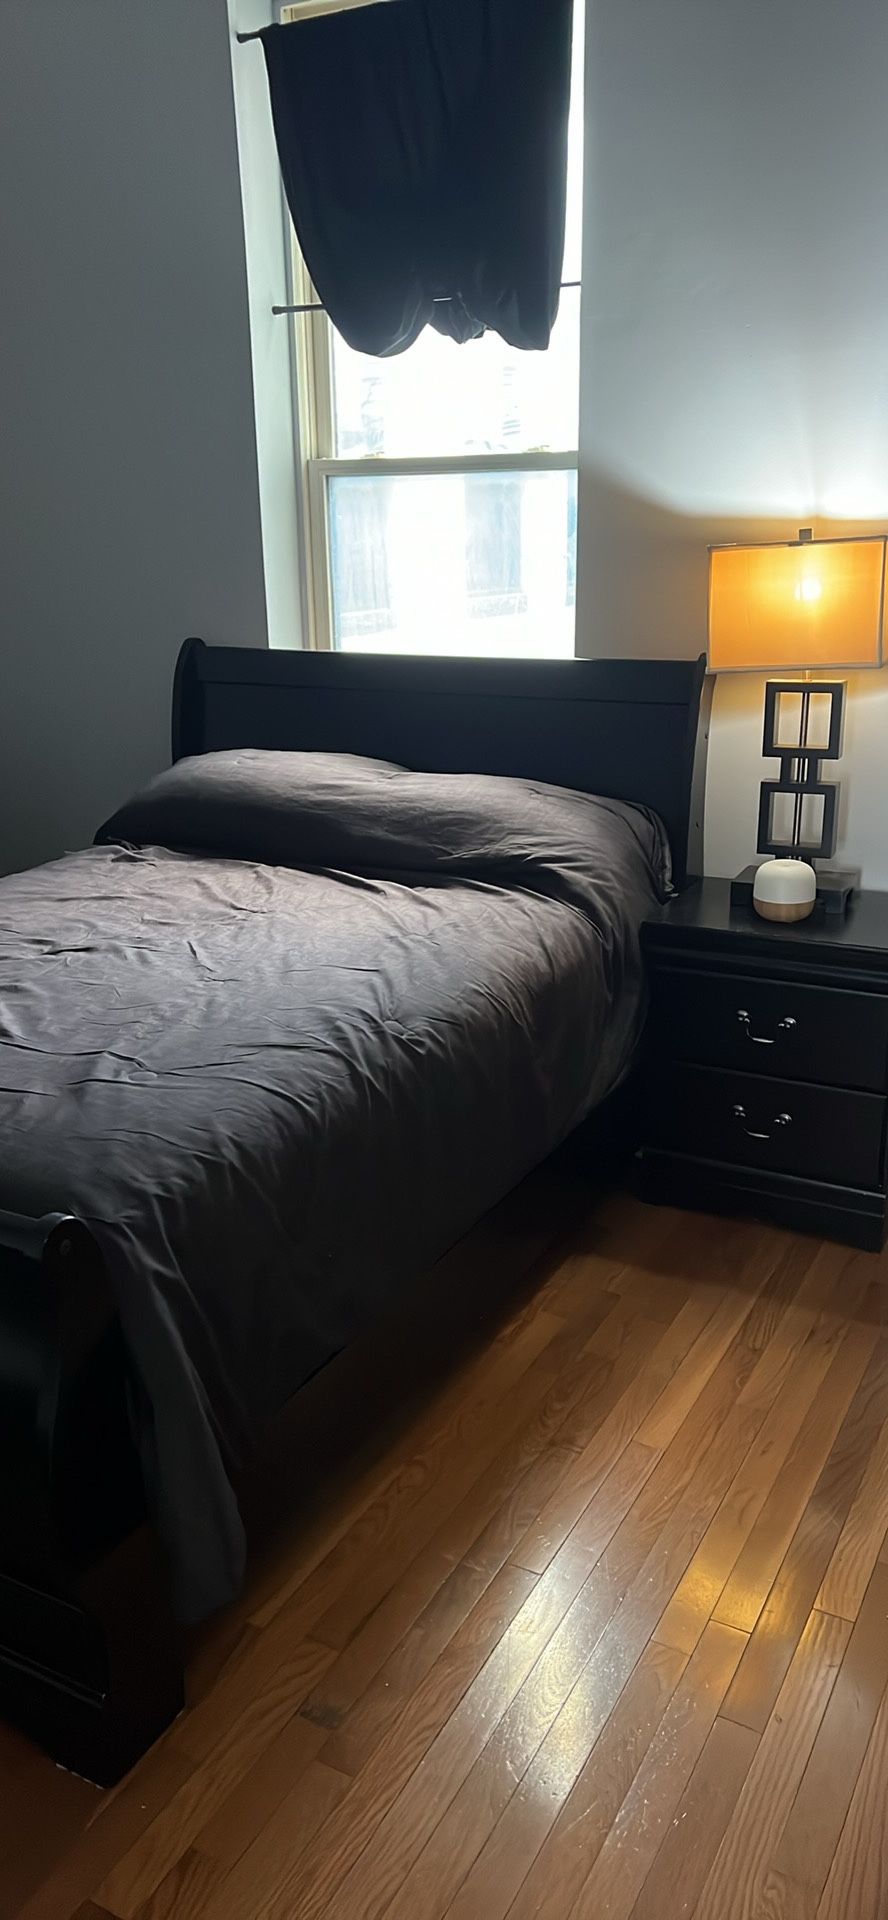 Black Full size bedroom Set (dresser, Bed, And Nightstand)